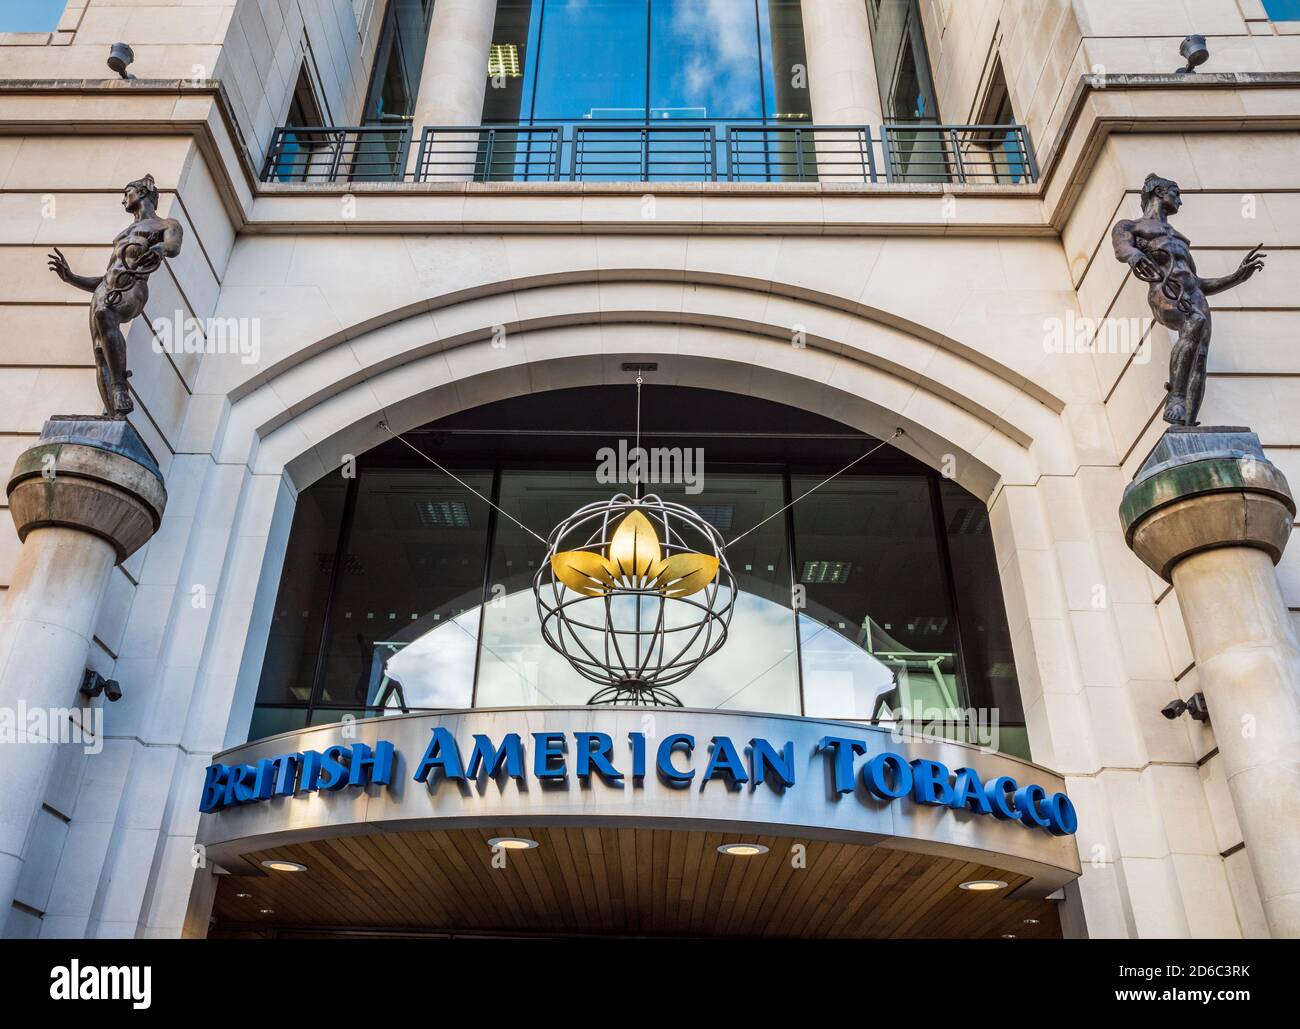 british american tobacco global travel retail